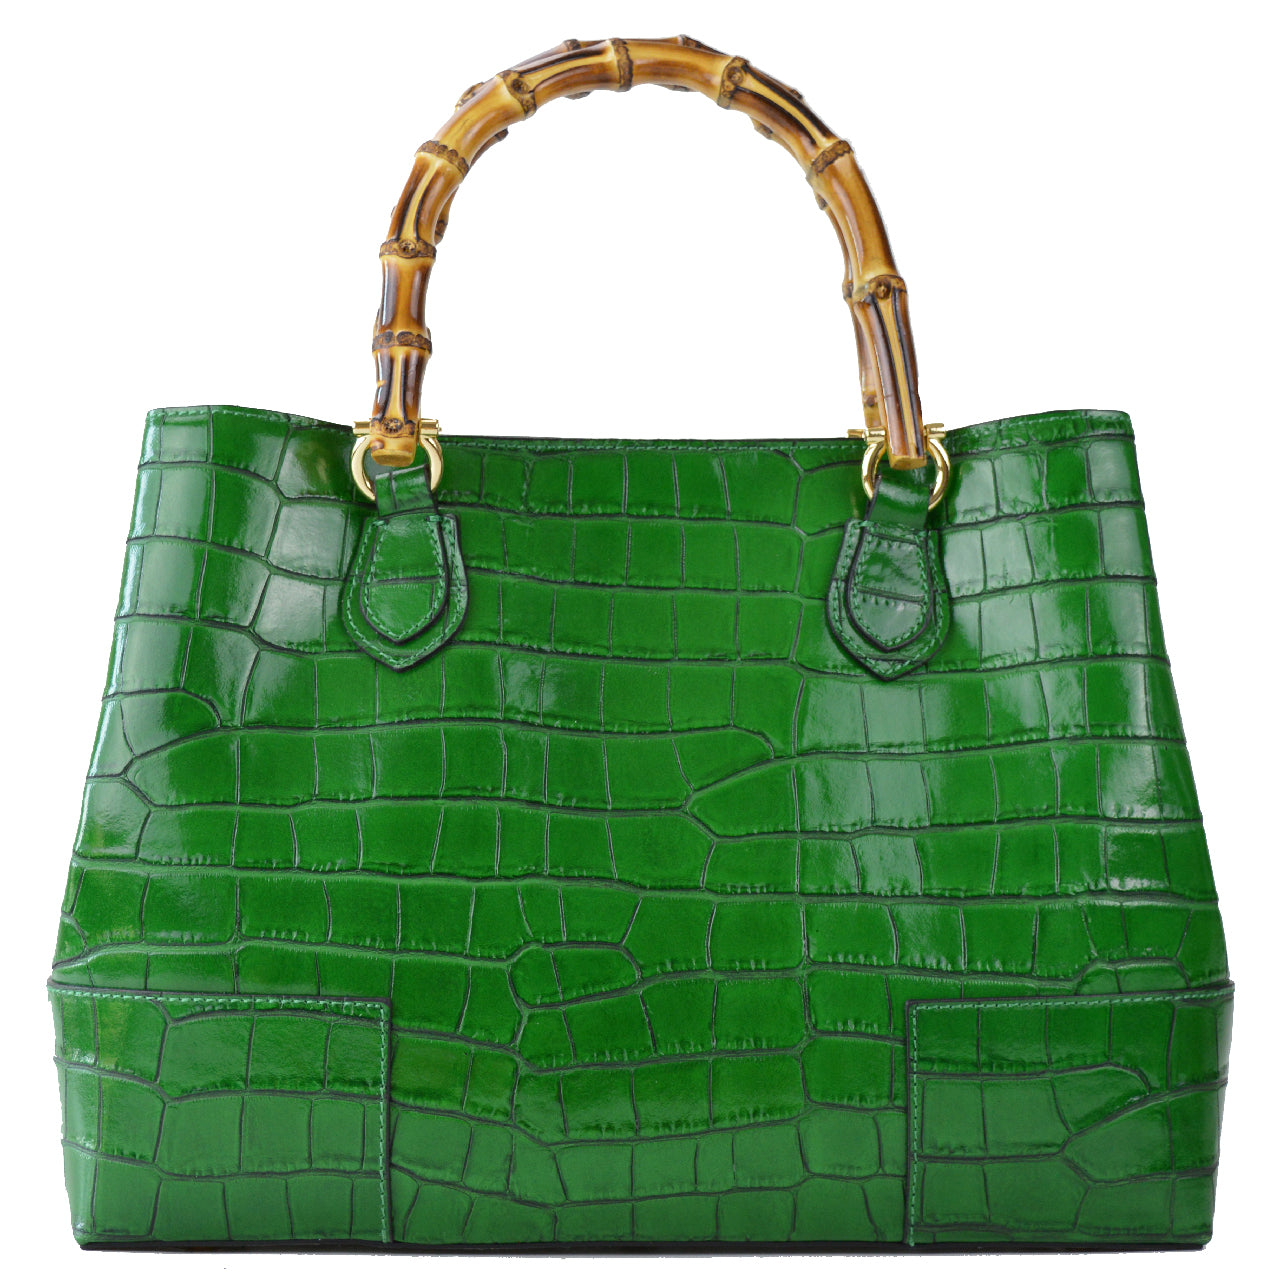 Pratesi Sarteano Shoulder Bag in genuine Italian leather K291 - Vegetable Tanned Italian Leather Cherry